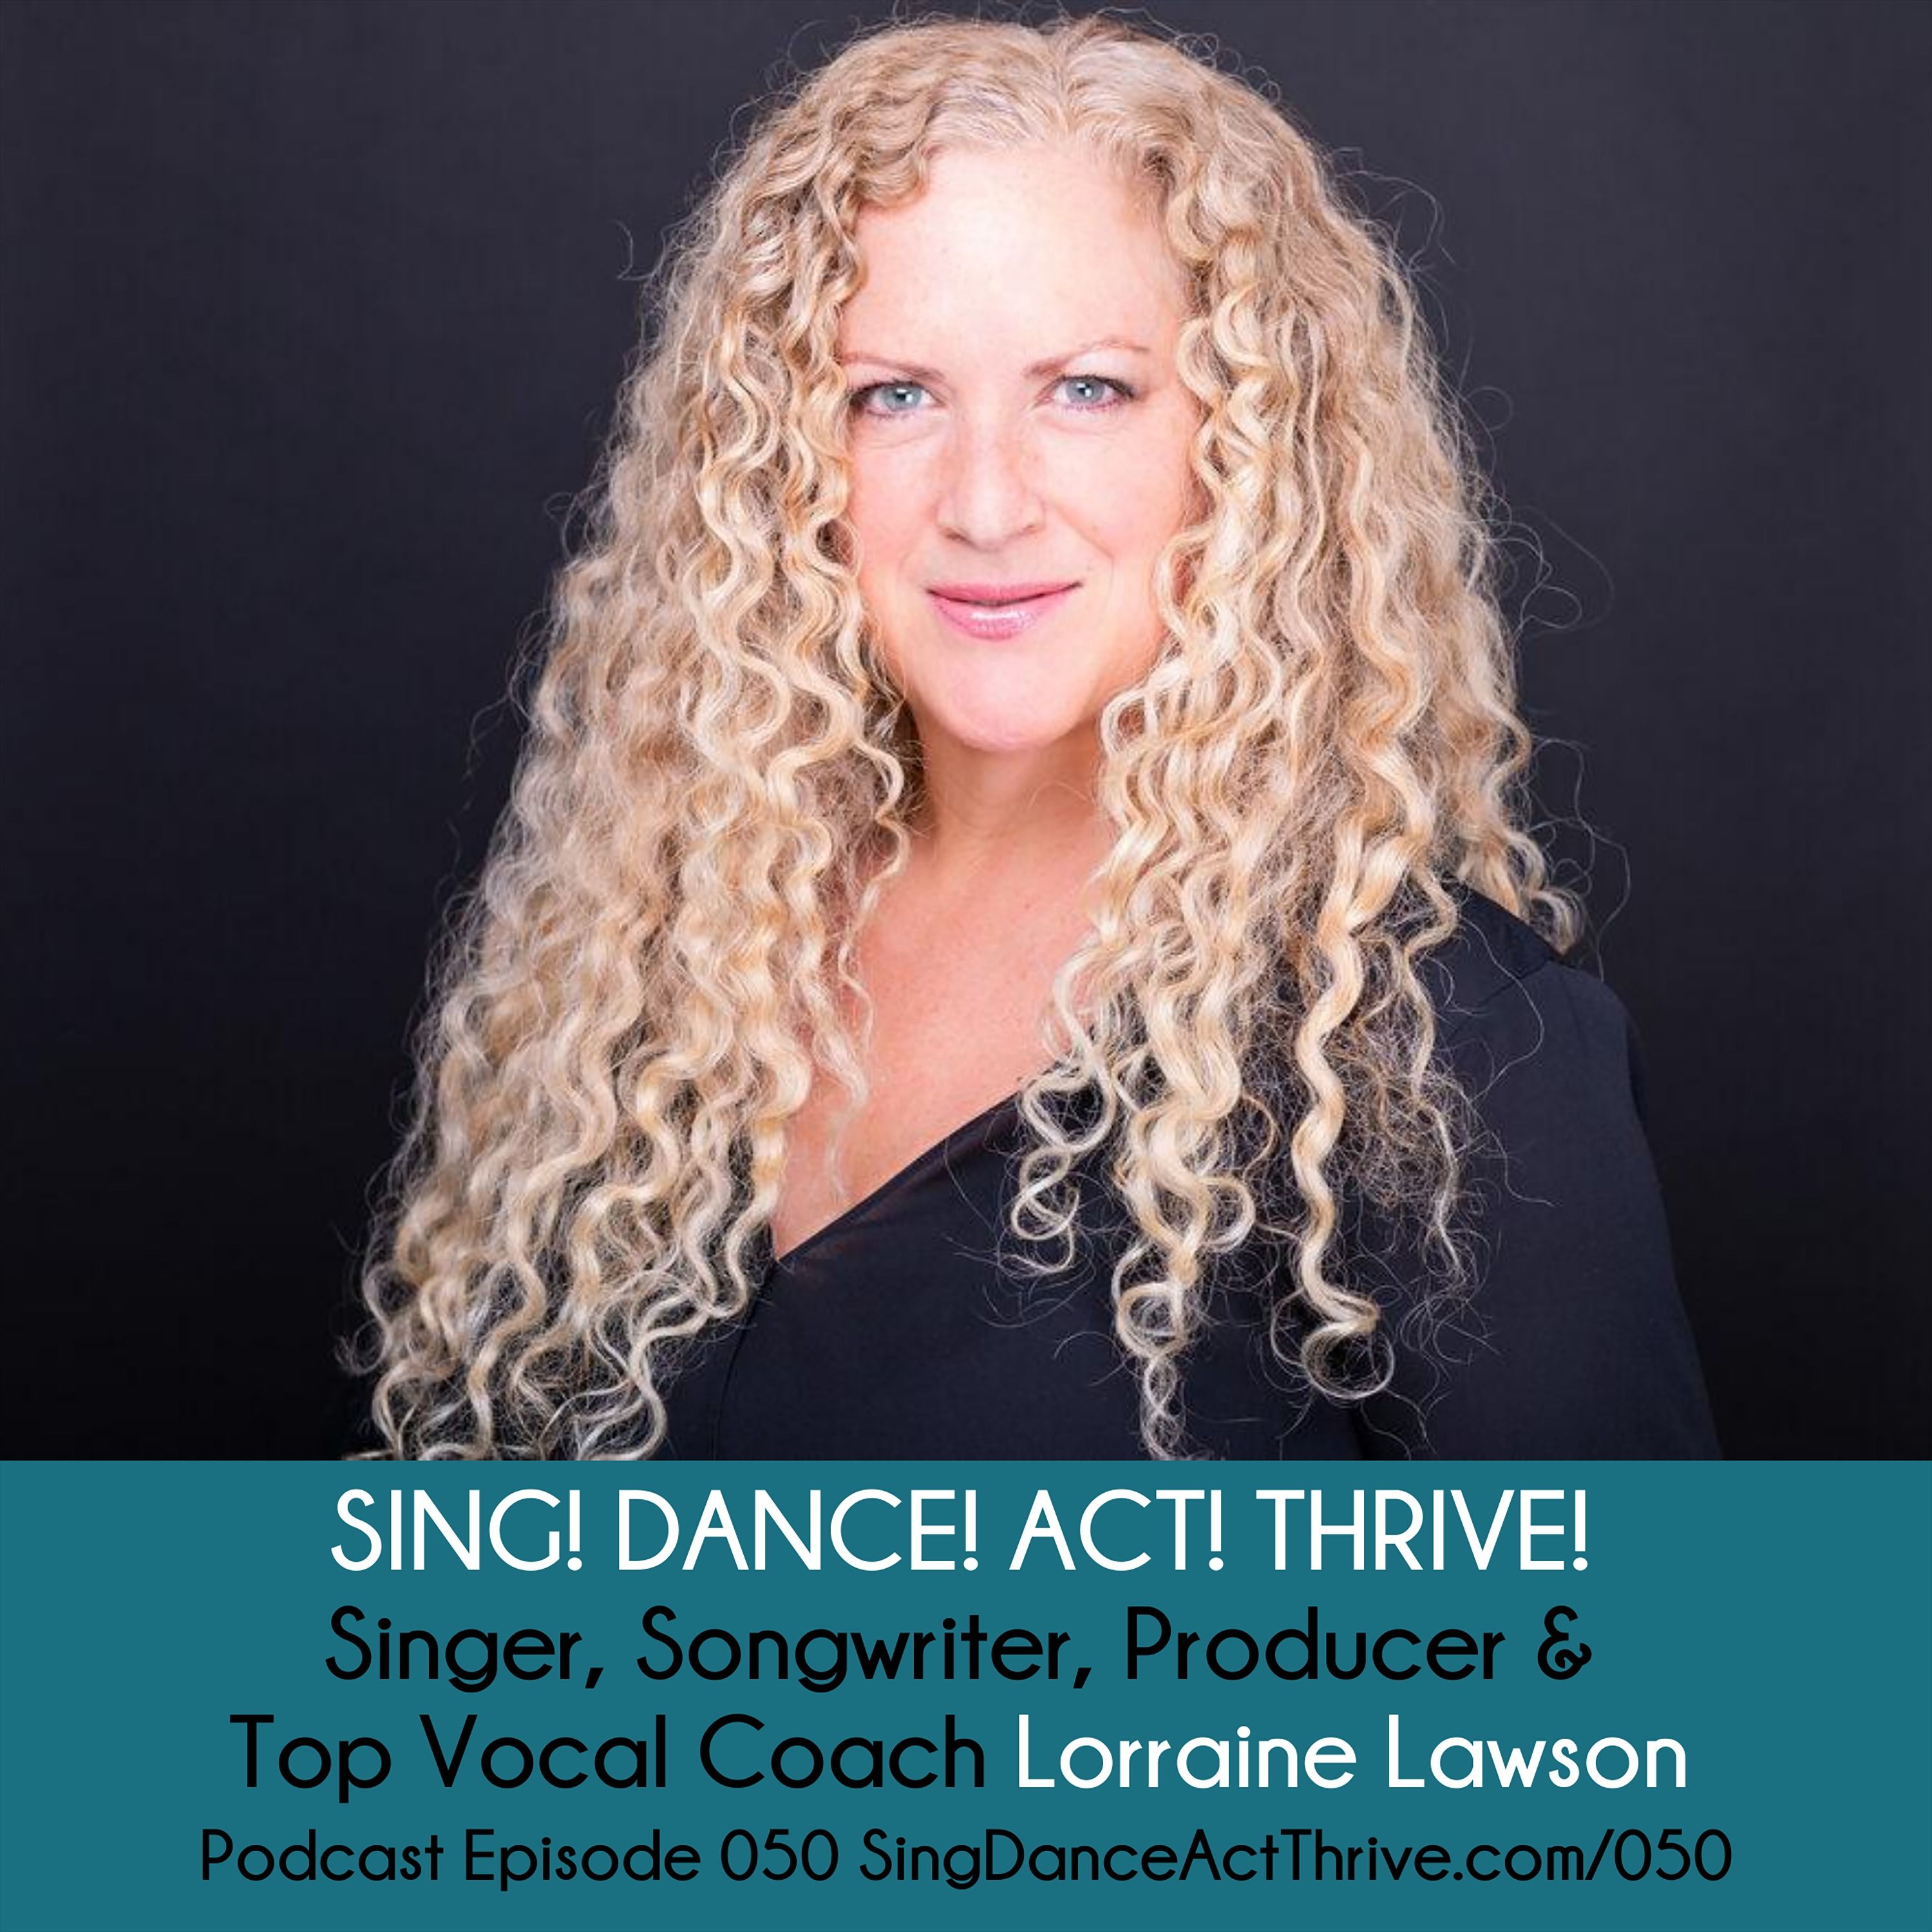 Lorraine Lawson, Top Vocal Coach, Singer, Songwriter, Producer hero artwork